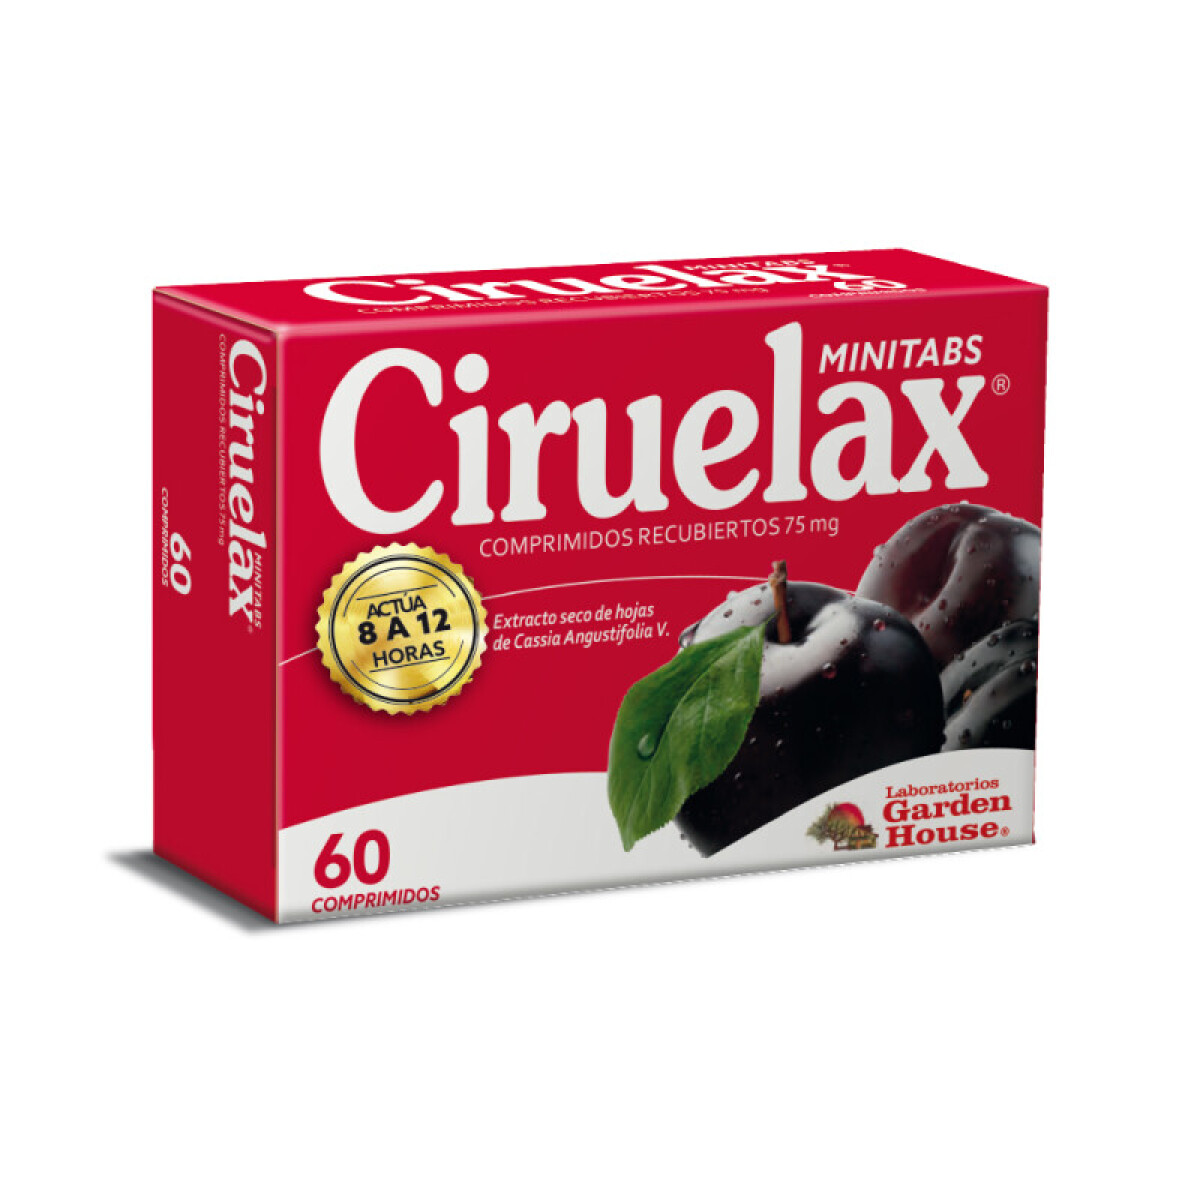 Ciruelax Minitabs 60 comprimidos 